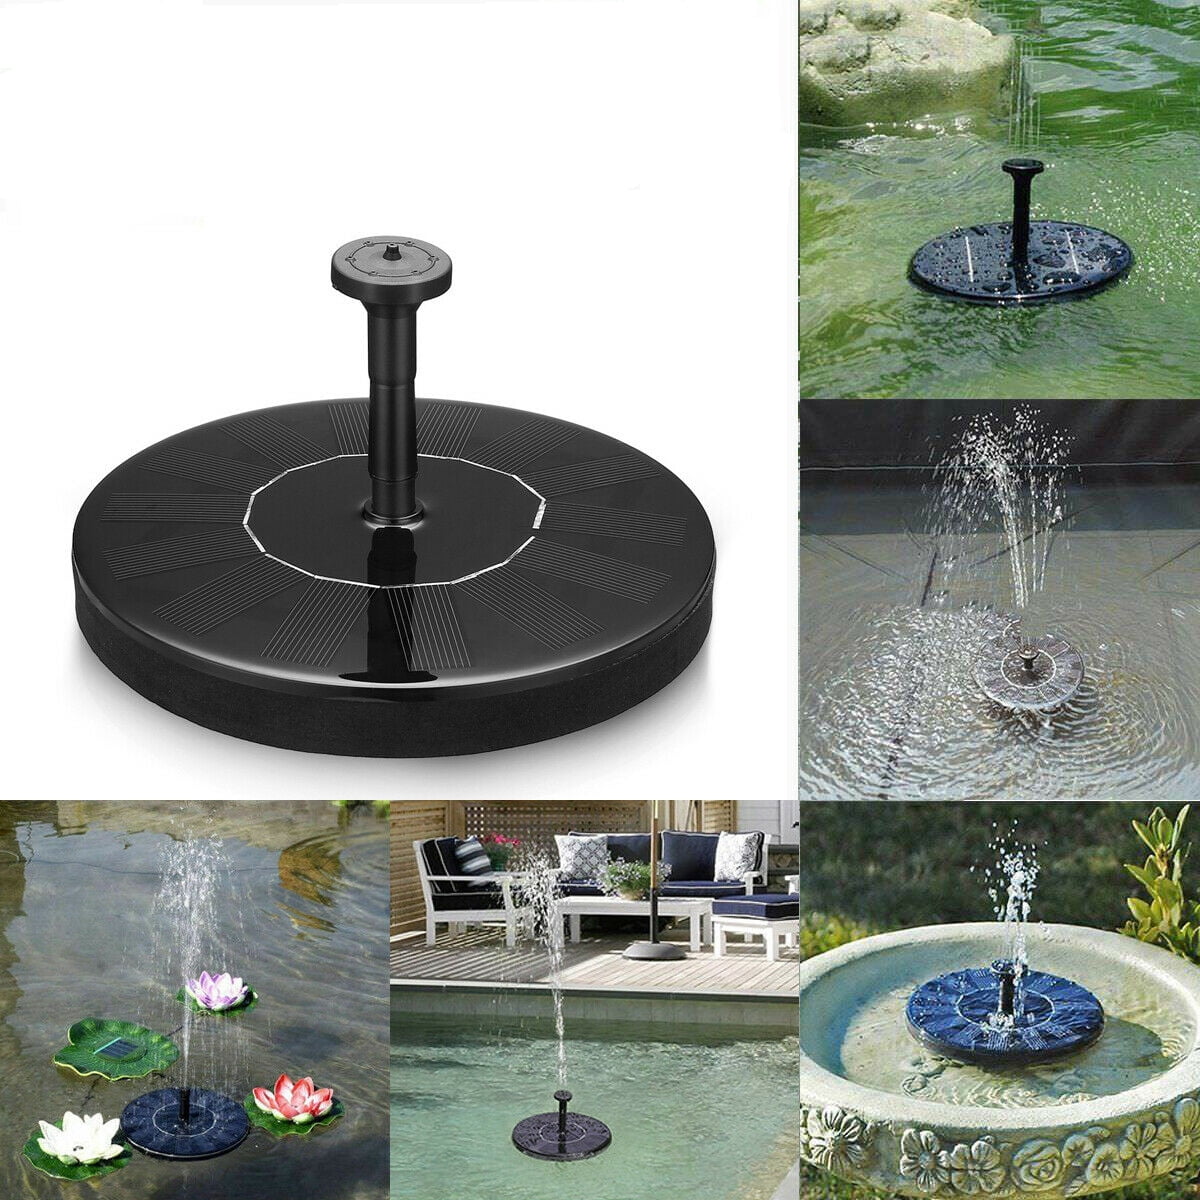 Floating Solar Powered Fountain Pond Pool Water Pump For Bird Bath Tank Garden 